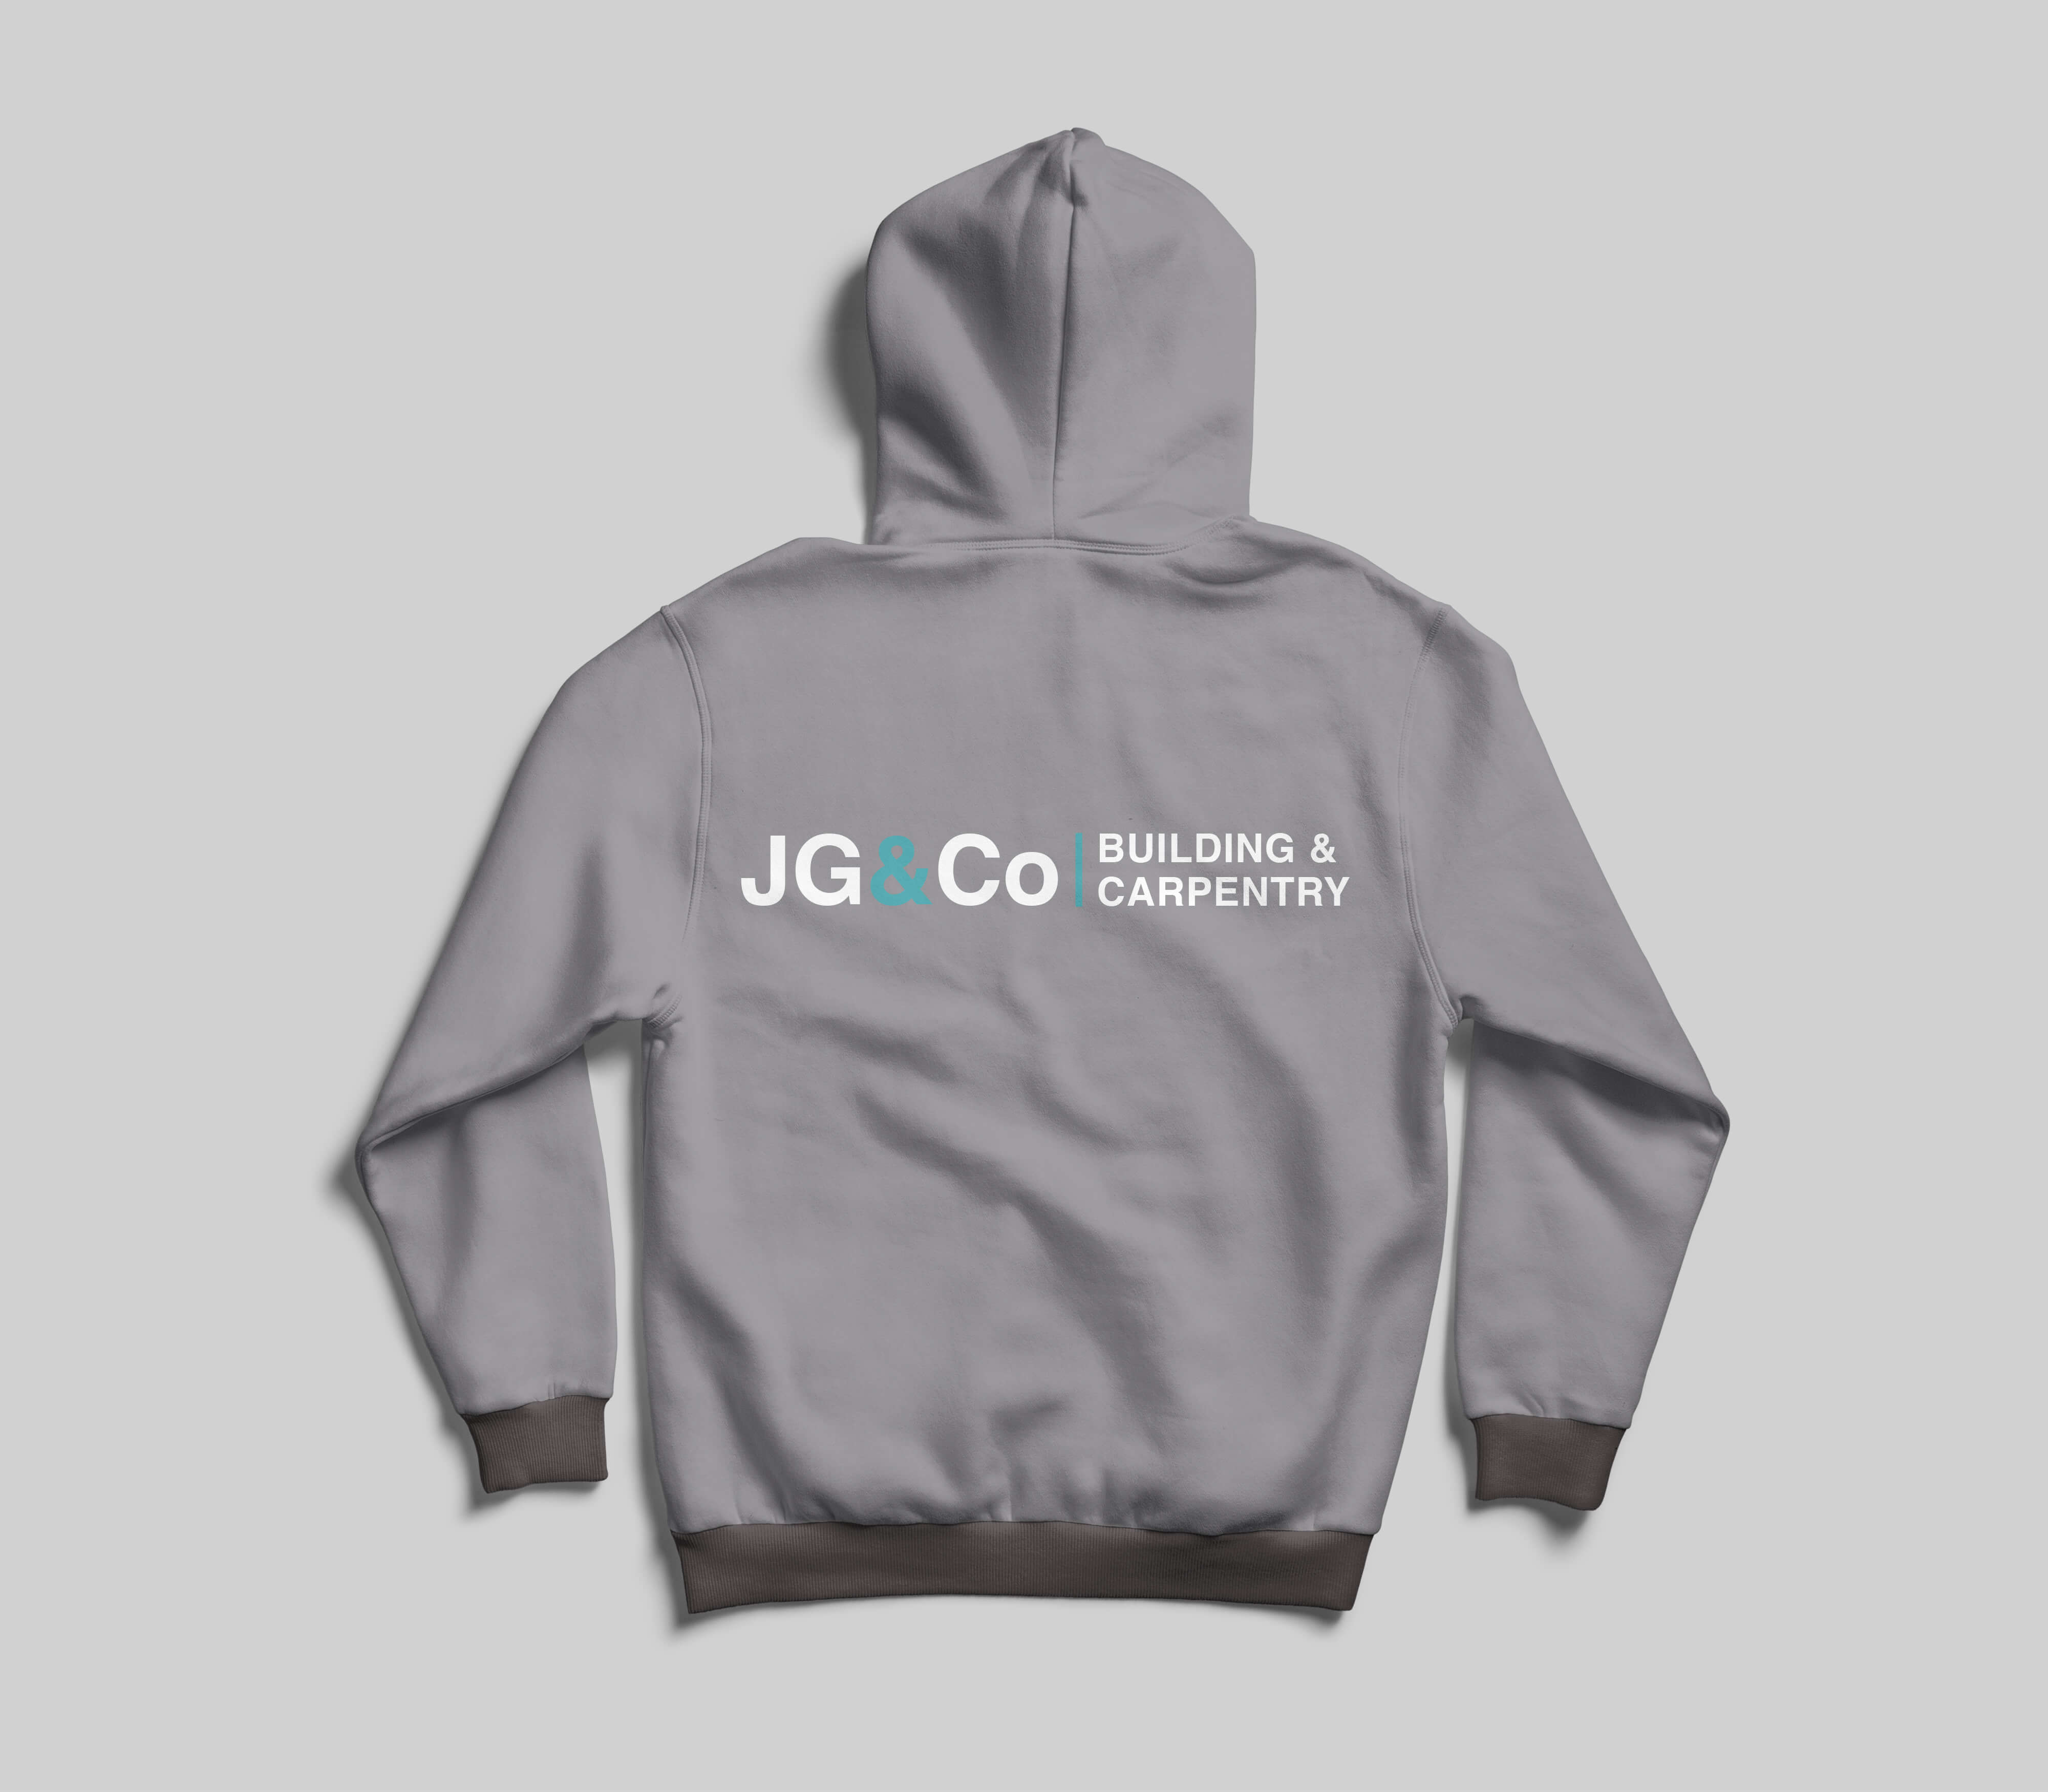 JG&Co-back-hoodie-shirt-metrodesign-branding-logo-and-graphic-design-service-for-builder-building-carpentry-company-apparel-designer-sydney